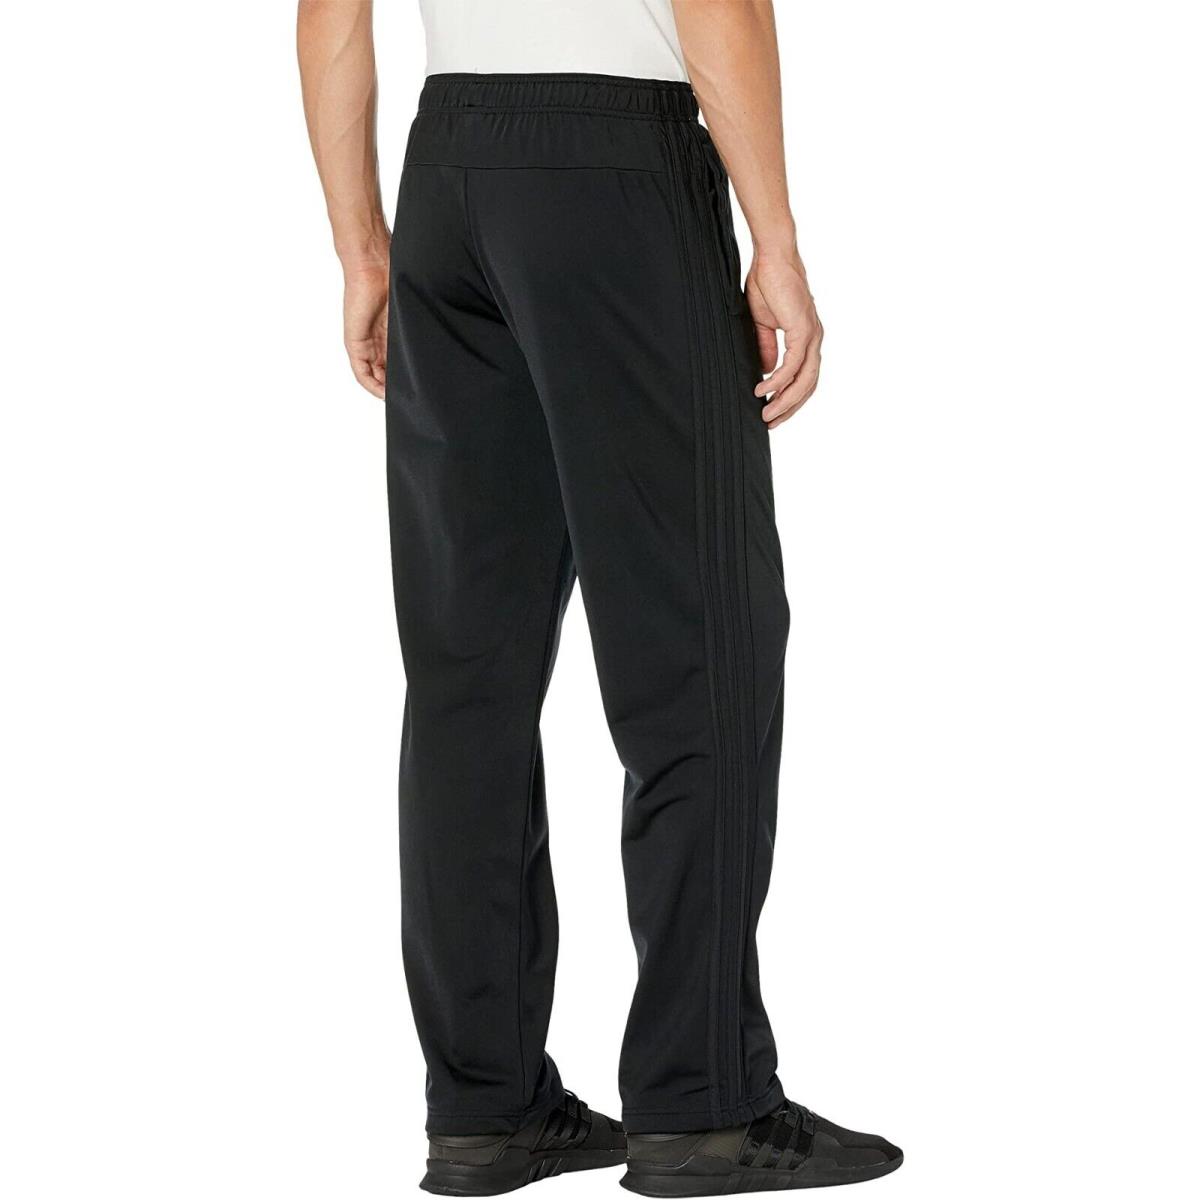 Adidas L72224 Tricot Track Pants Black Men`s Size M - Black